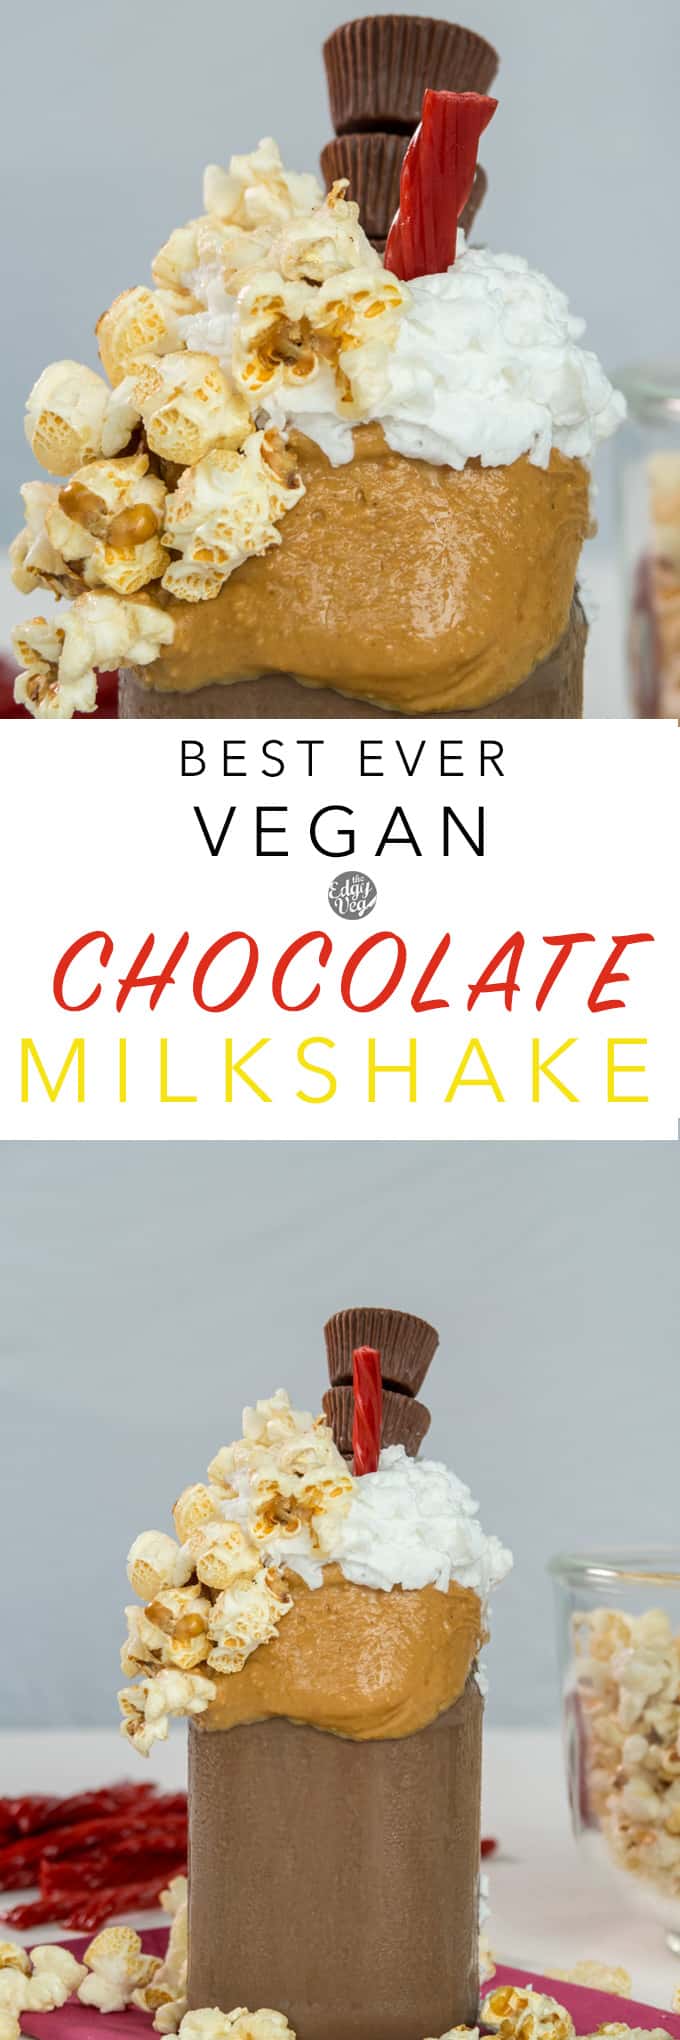 best vegan milkshake